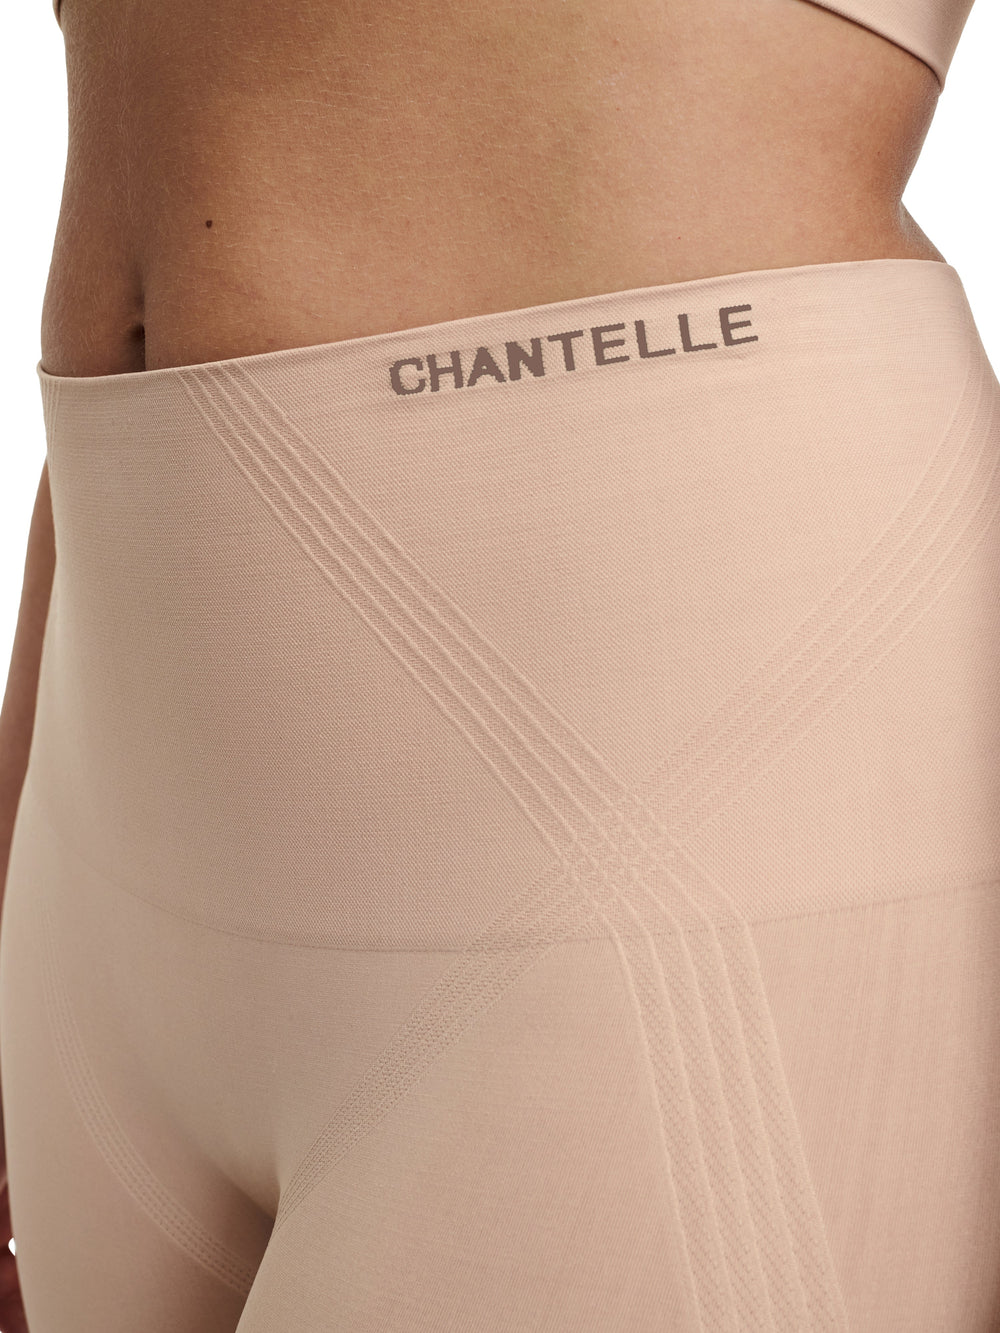 Chantelle Smooth Comfort Sculpting Long Shorts - Sirocco Shorts Chantelle 